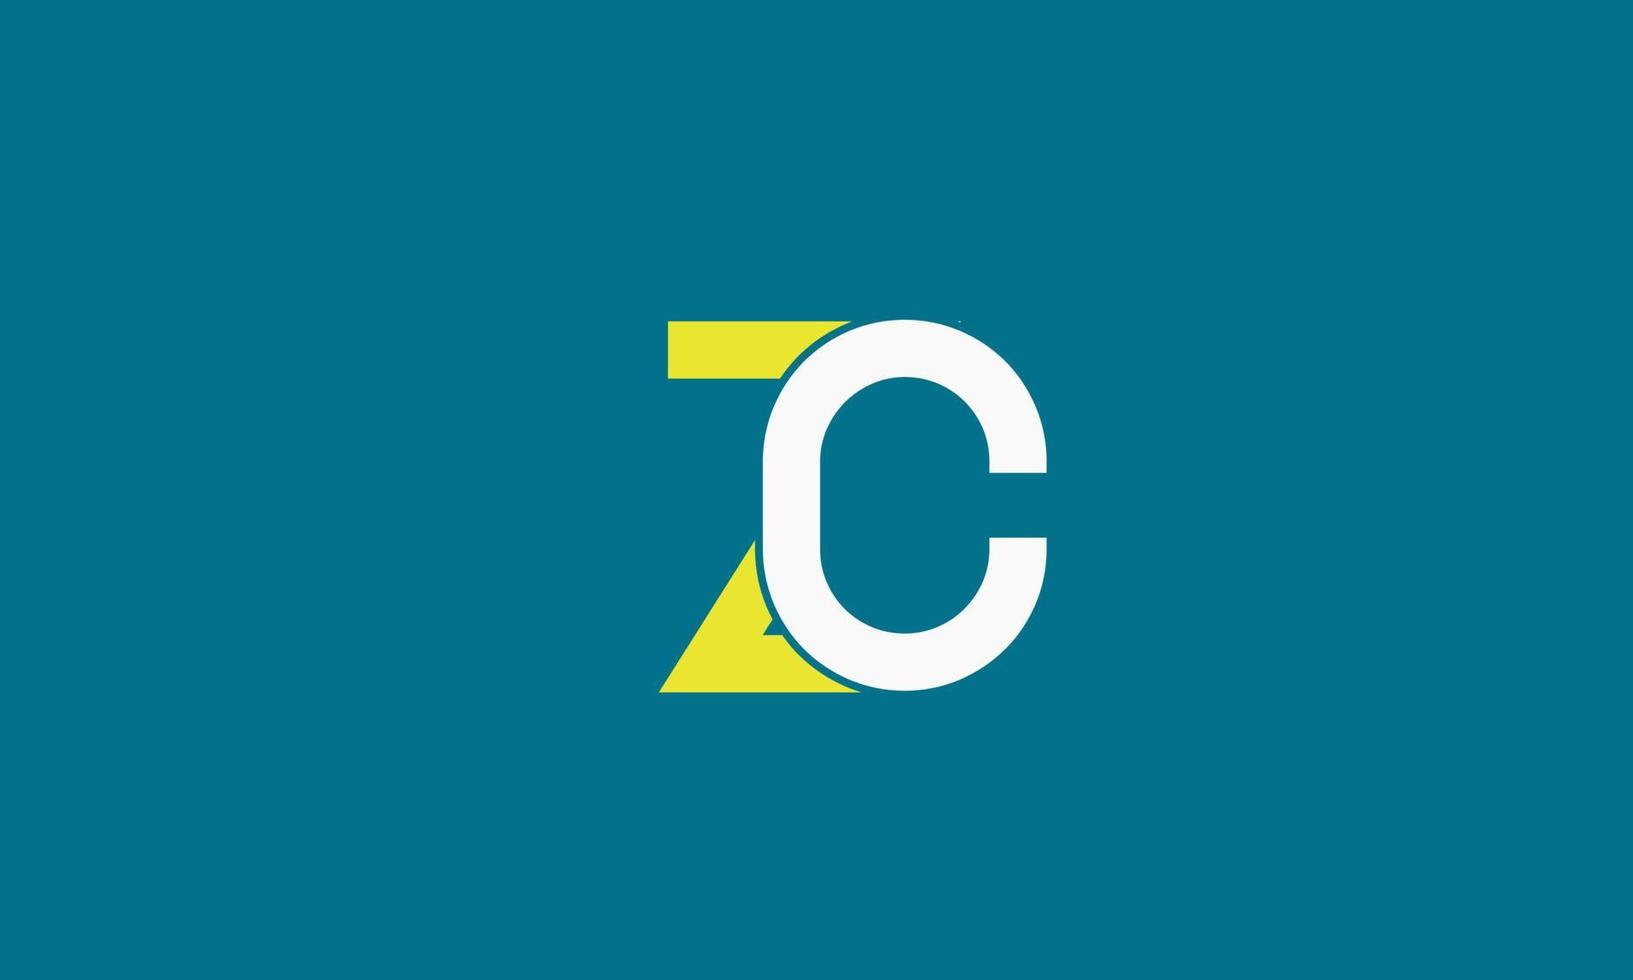 letras do alfabeto iniciais monograma logotipo zc, cz, z e c vetor